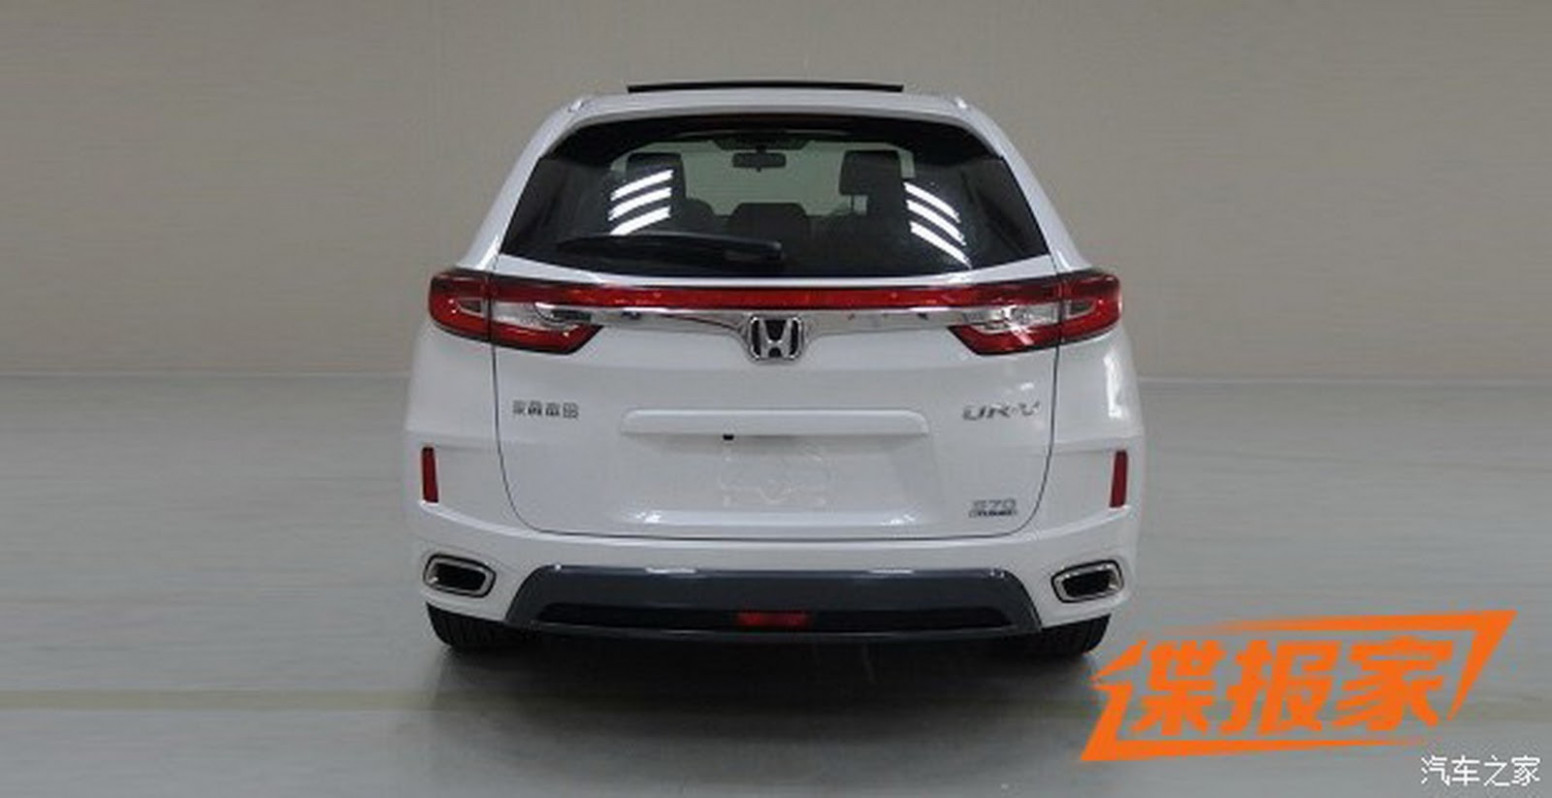 New Model and Performance Honda Urv 2023